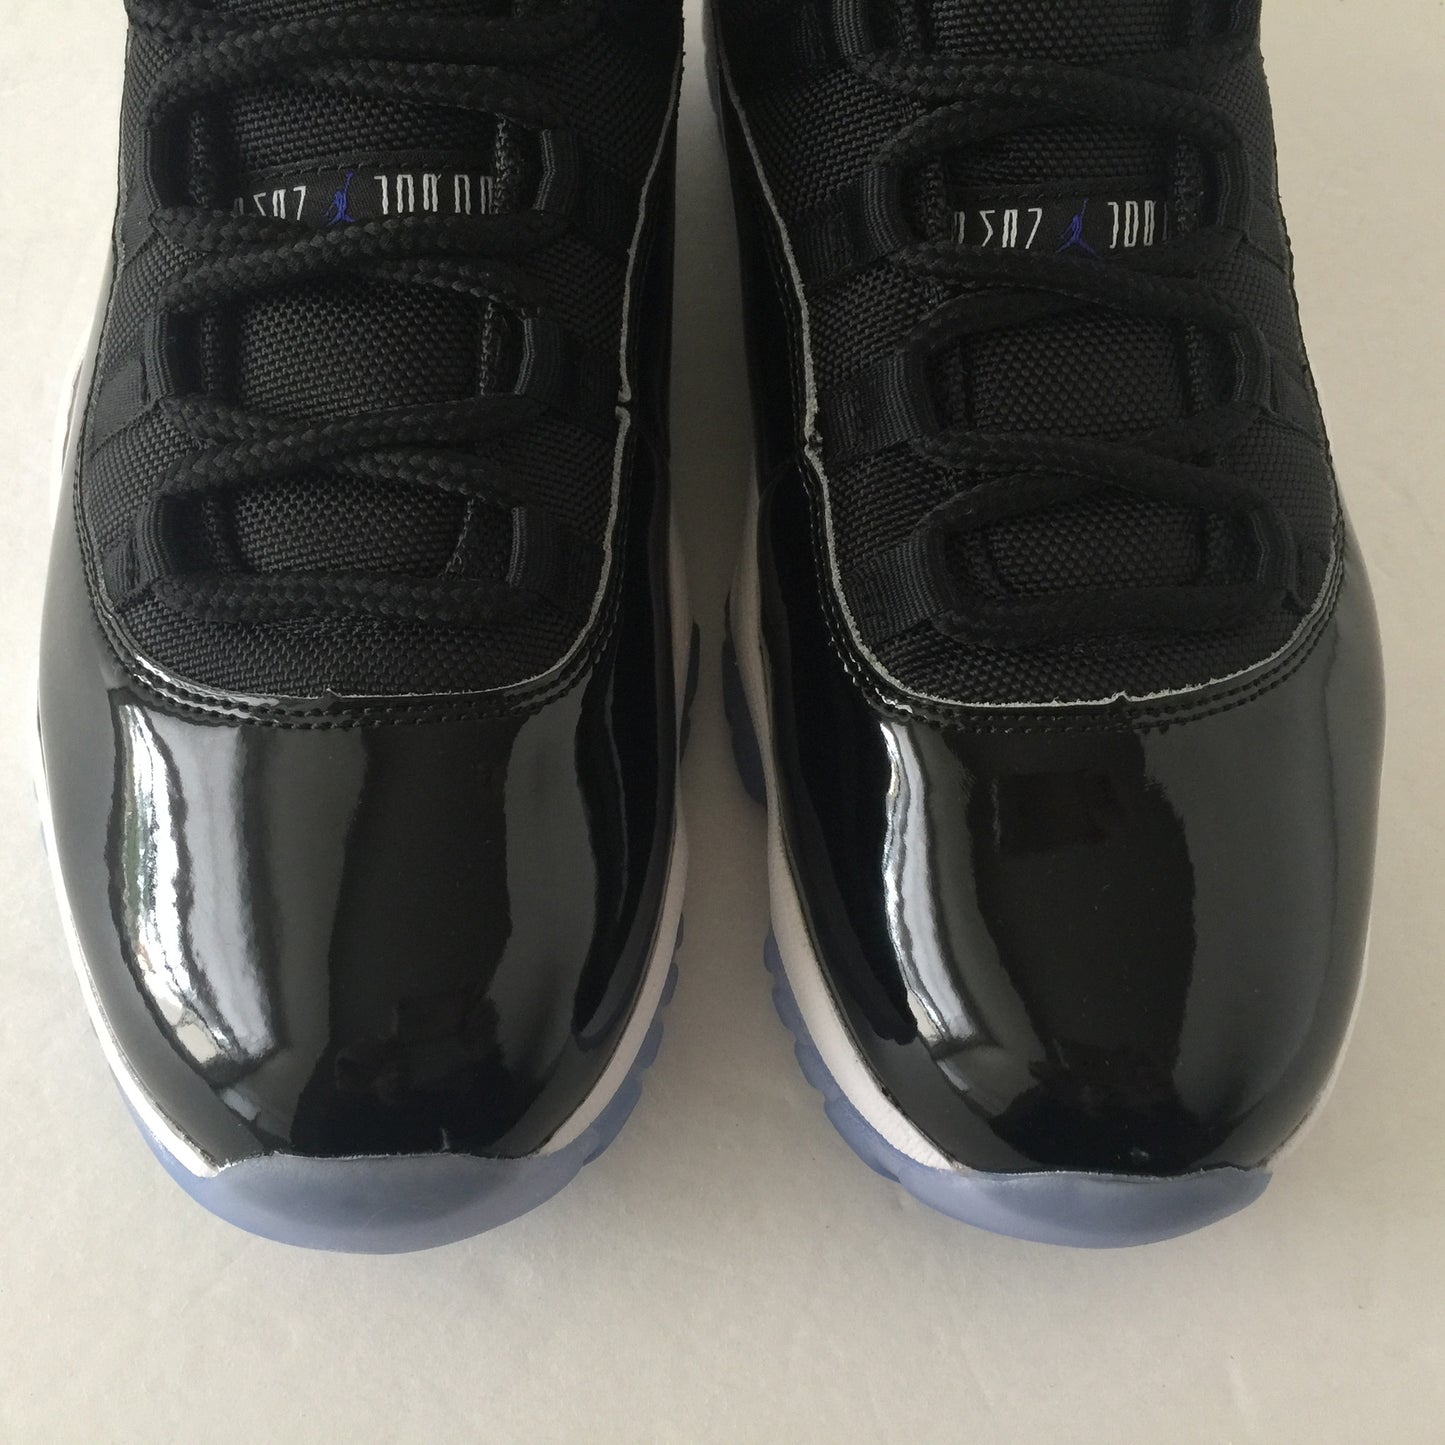 DS Nike Air Jordan 11 XI Retro Space Jam 2016 Size 10/Size 11/Size 12/Size 13/Size 14 - DOPEFOOT
 - 3